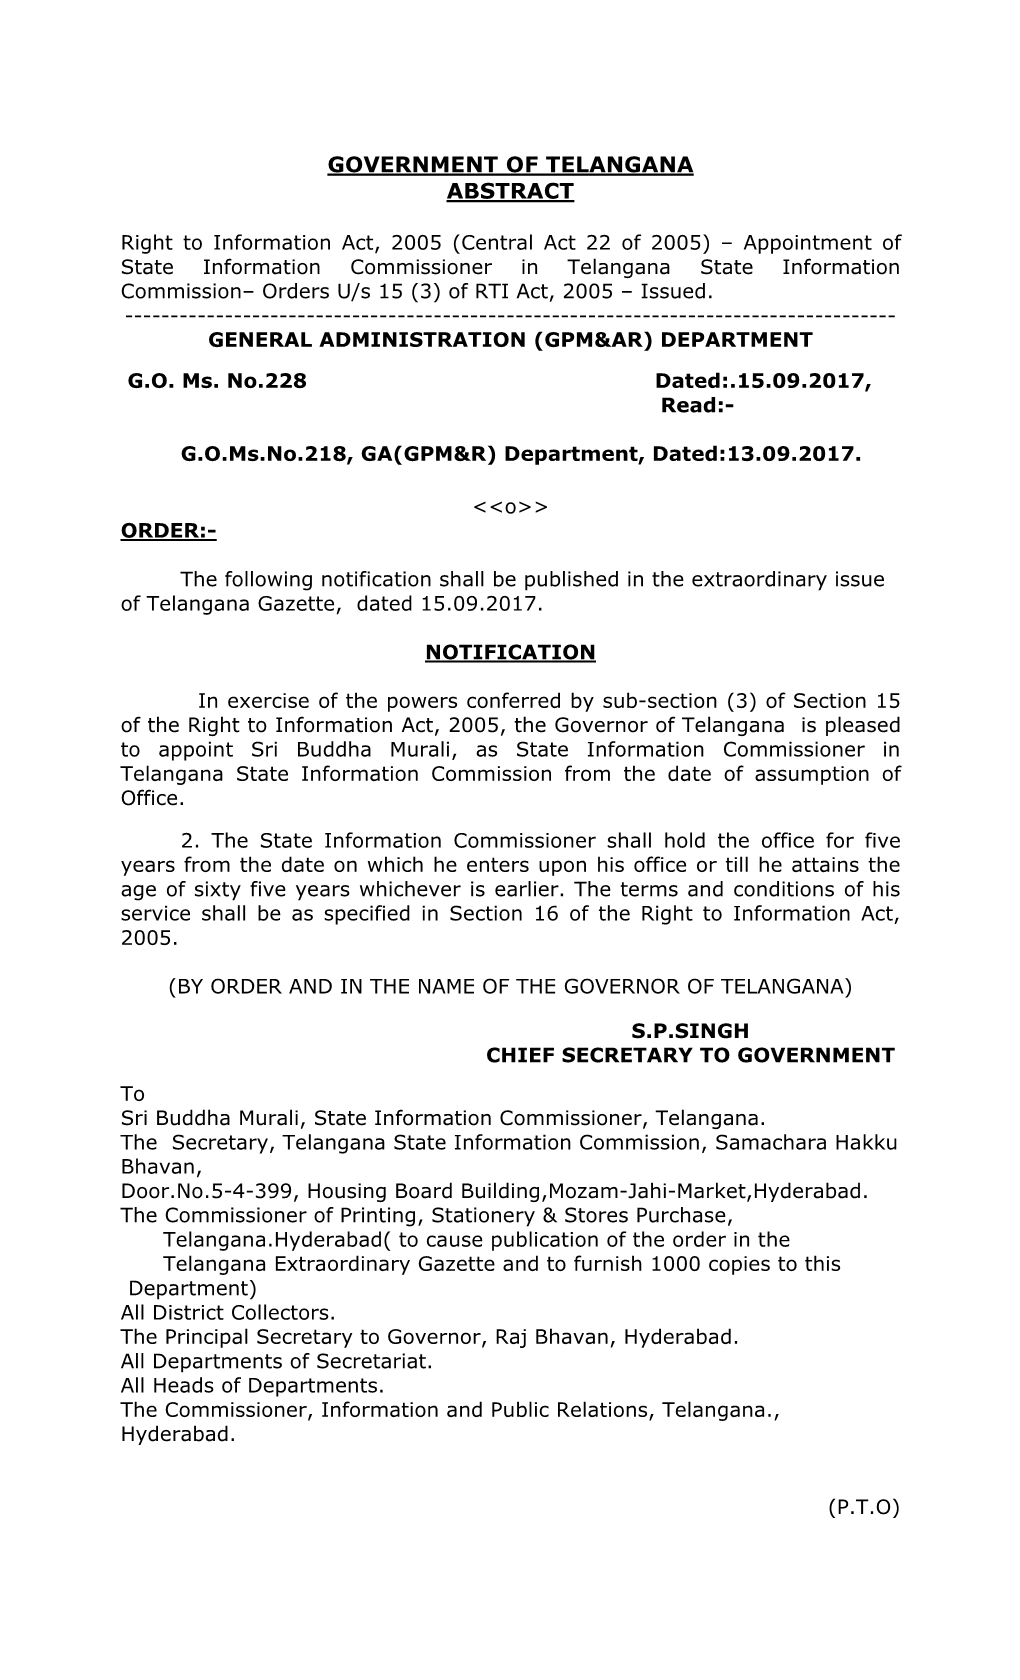 Government of Telangana Abstract